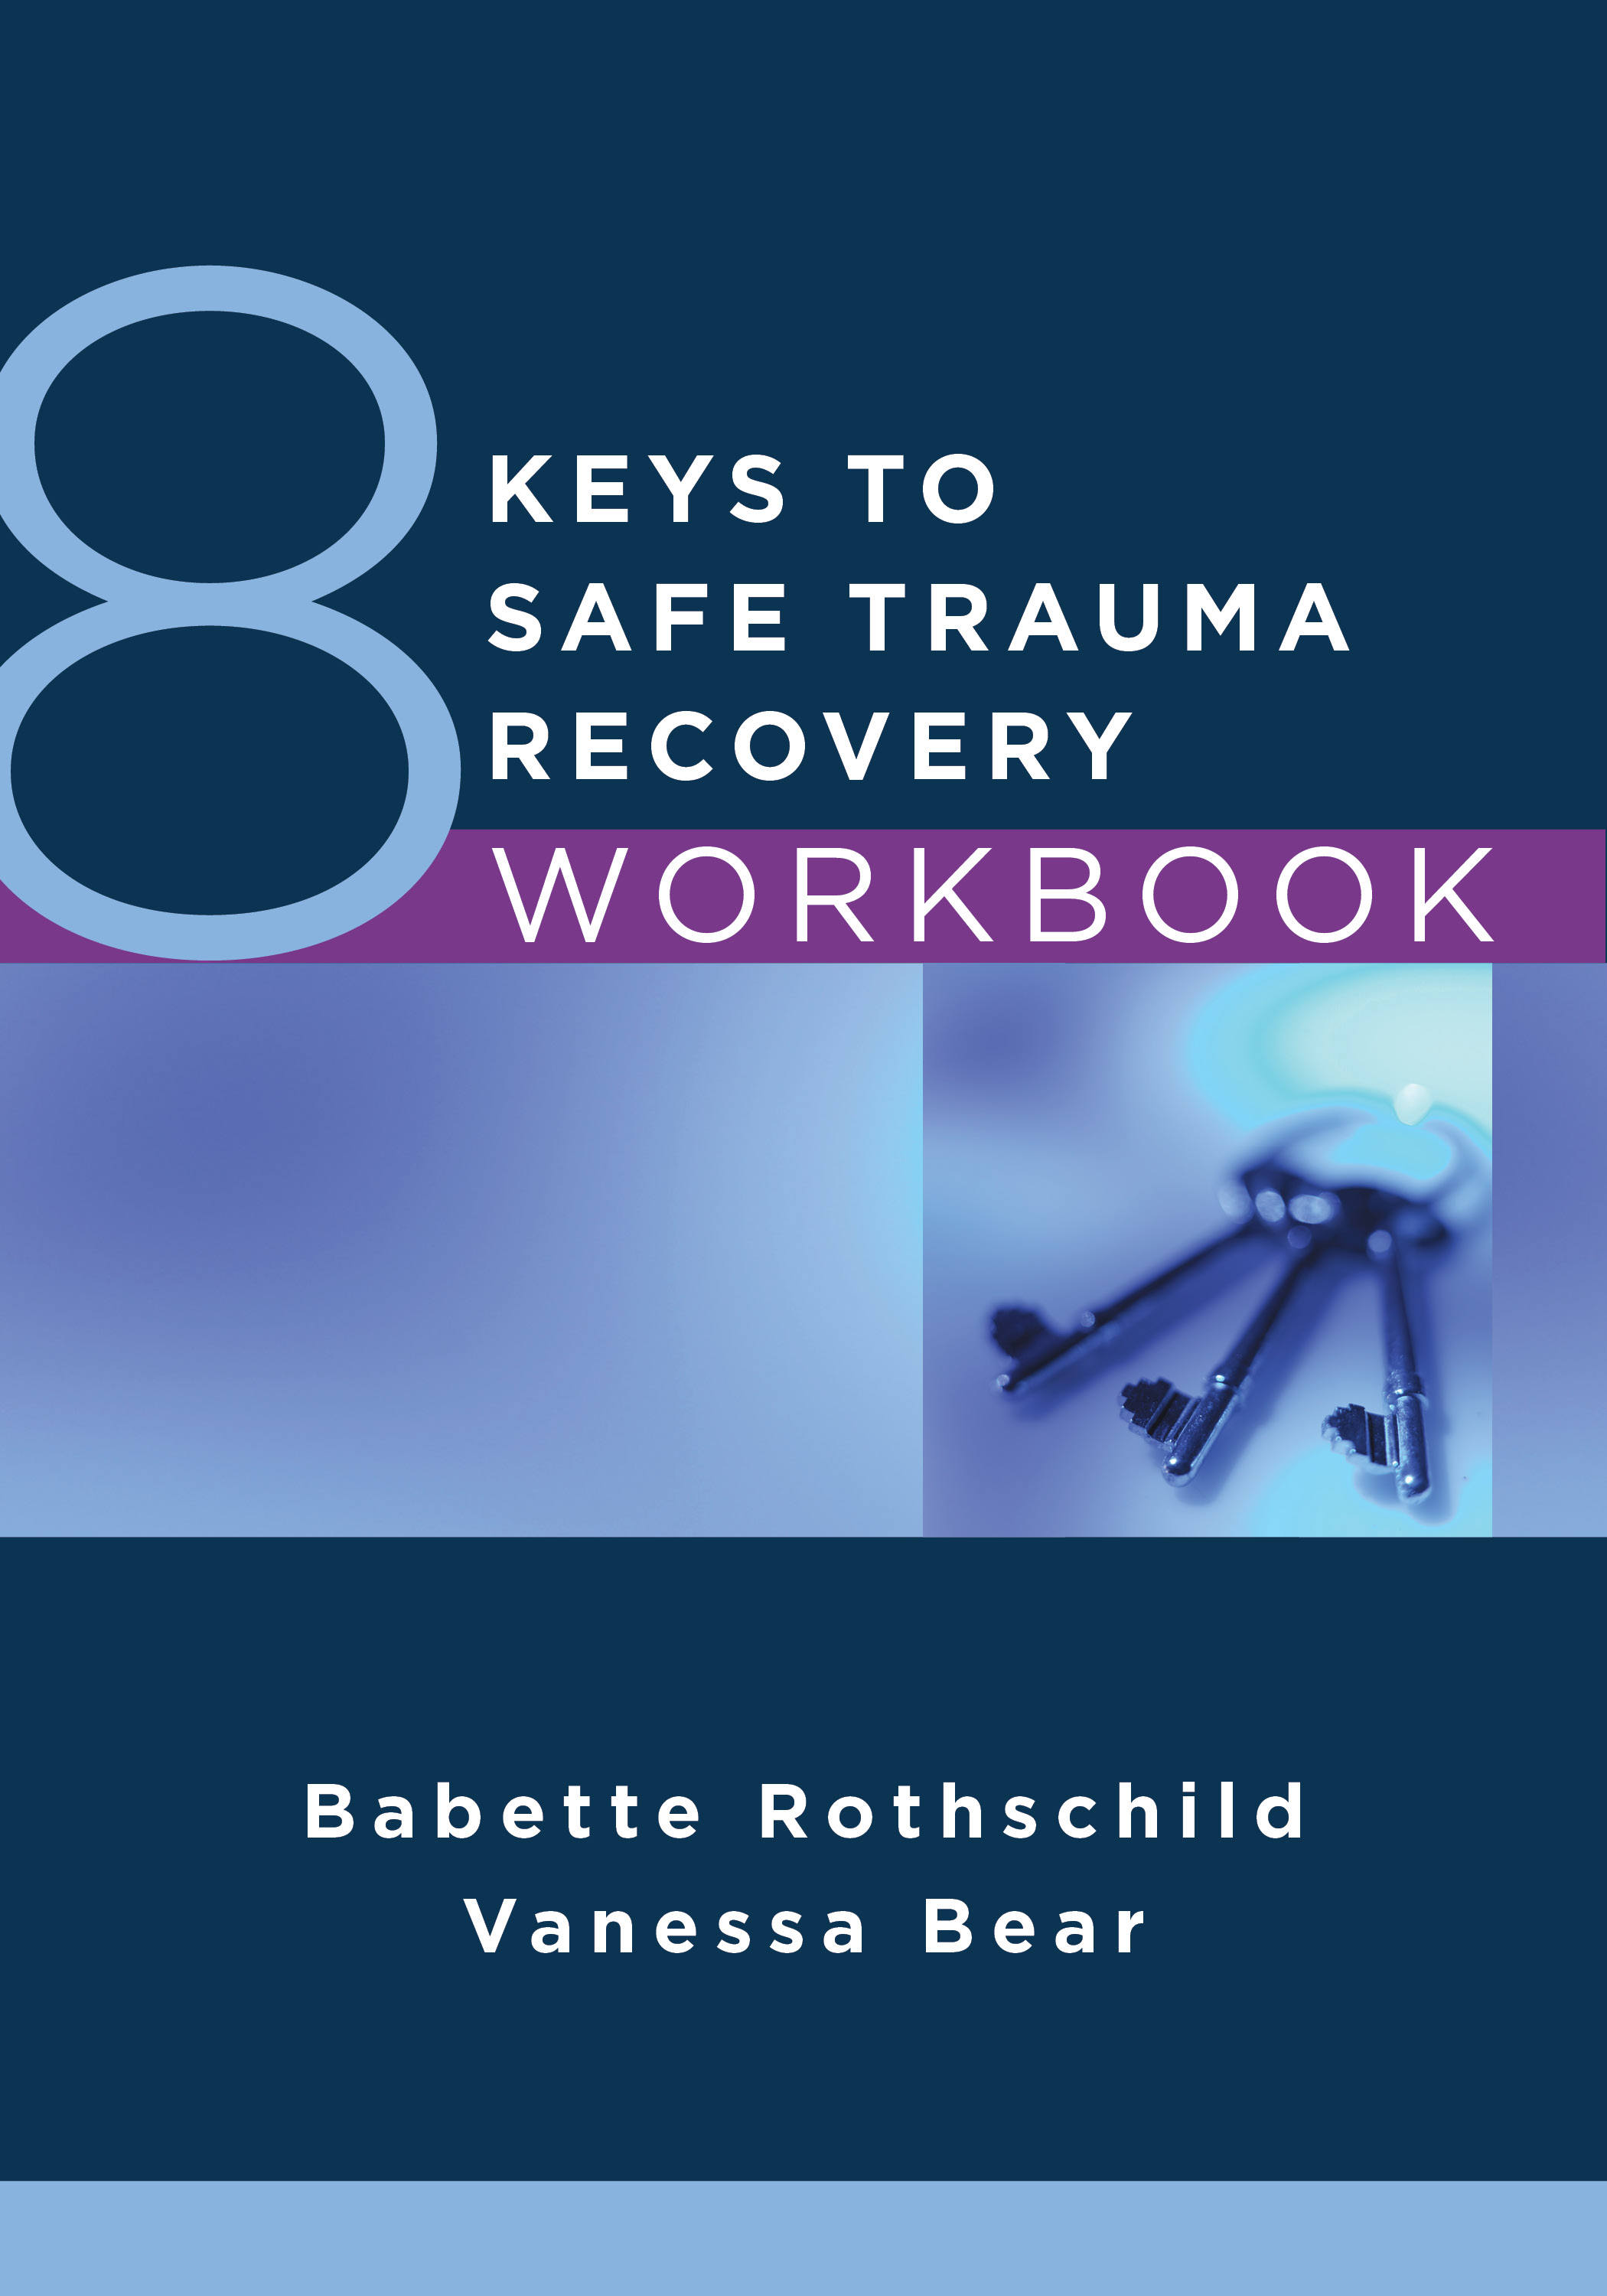 8 Keys to Safe Trauma Recovery Workbook (8 Keys to Mental Health)